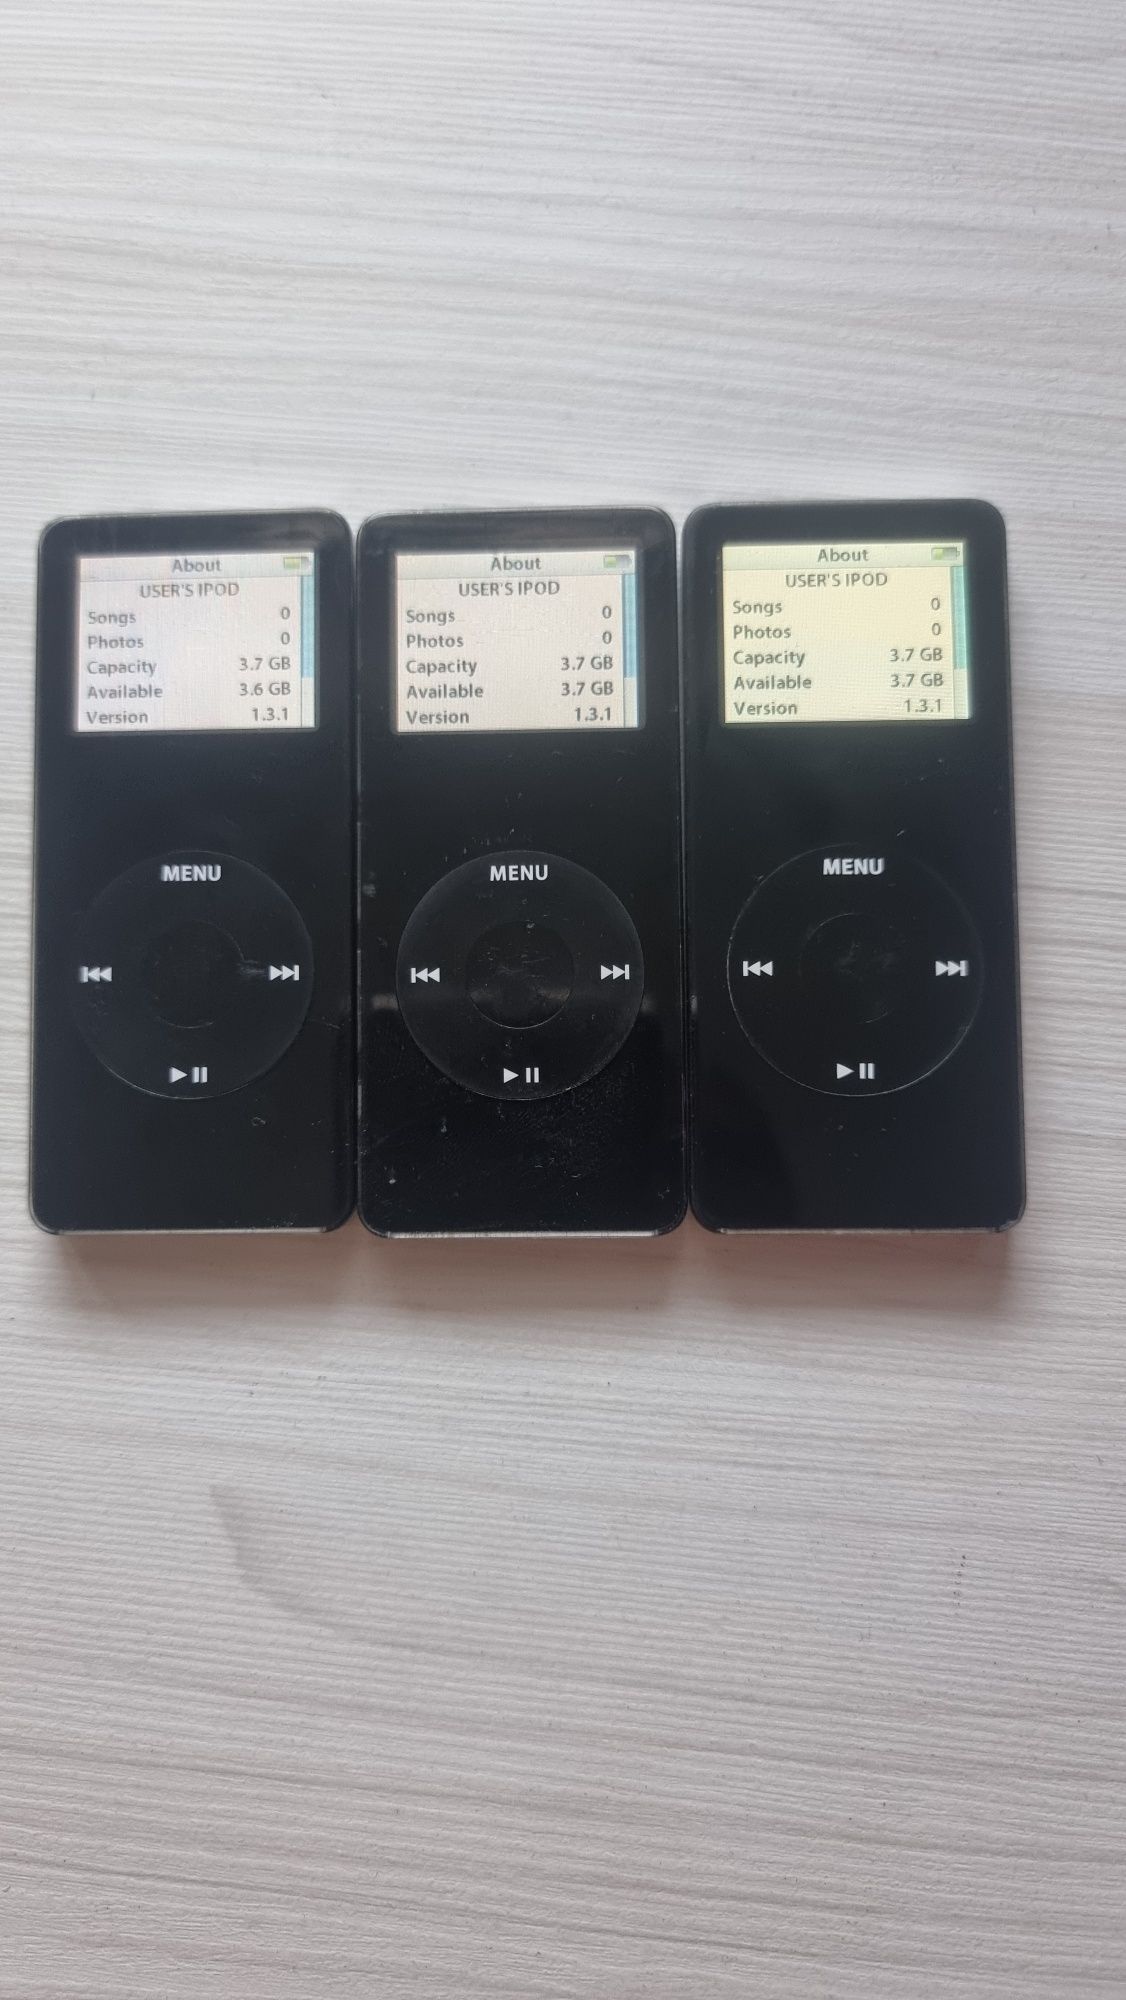 iPod nano 1st gen 4gb